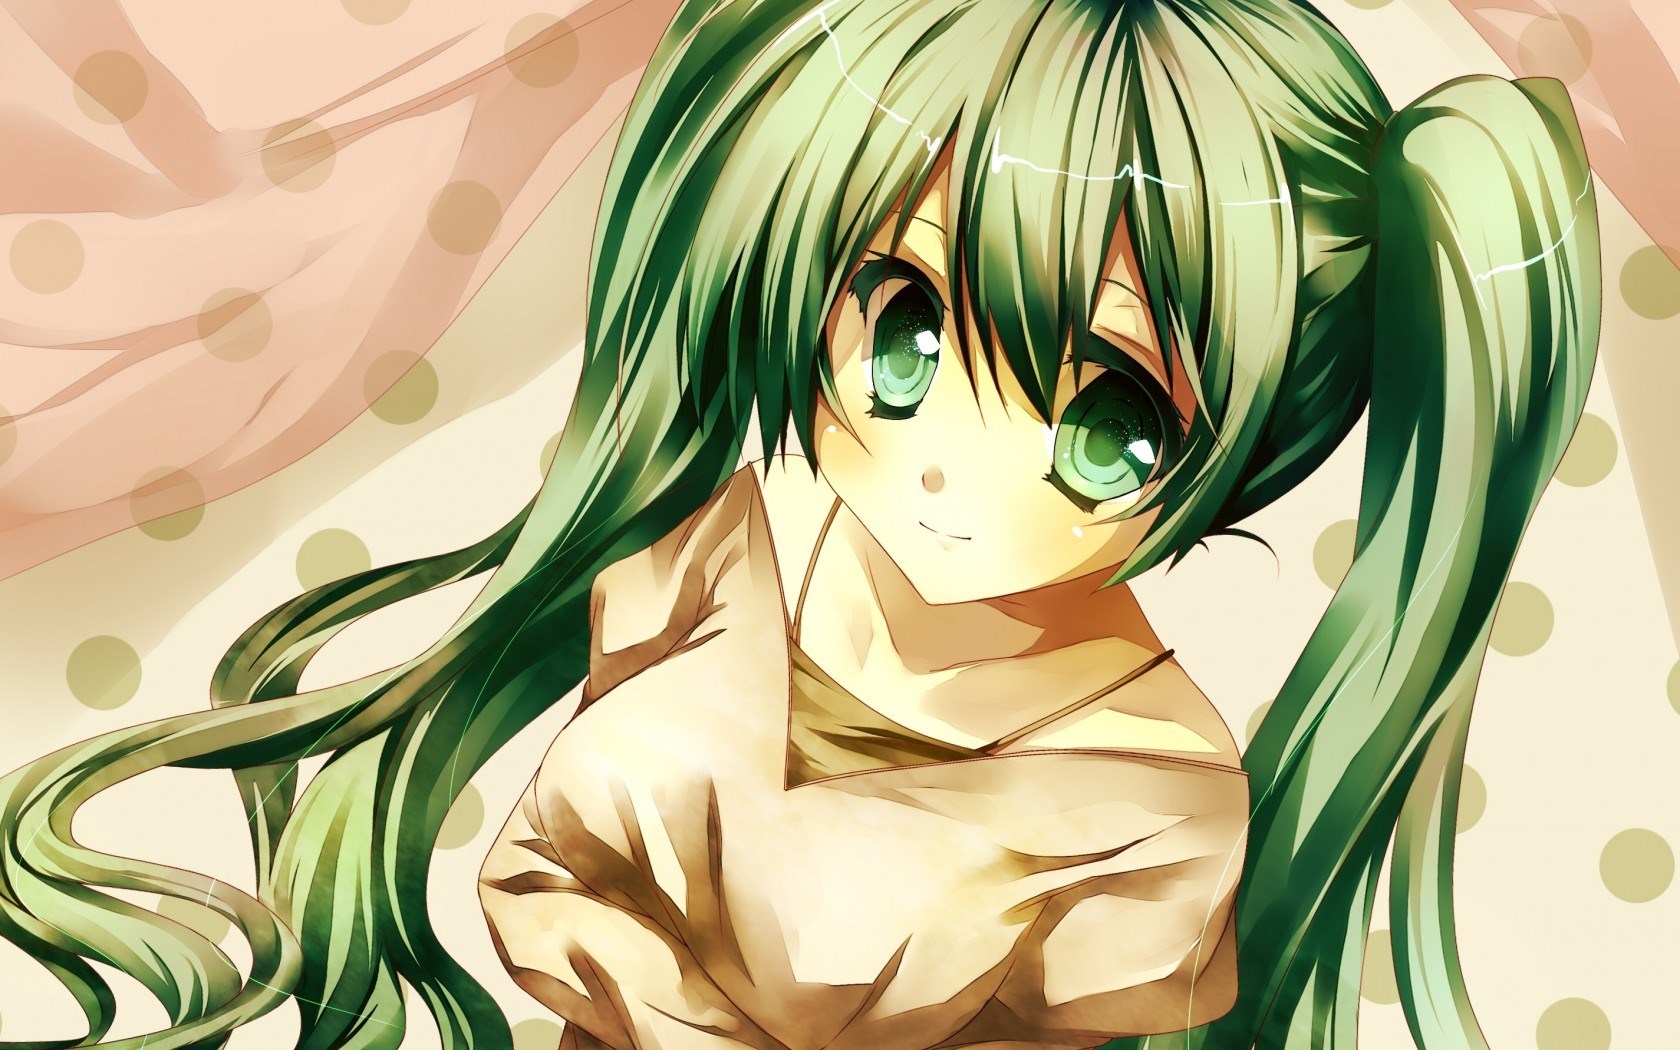 Anime Girl with Green Hair Art